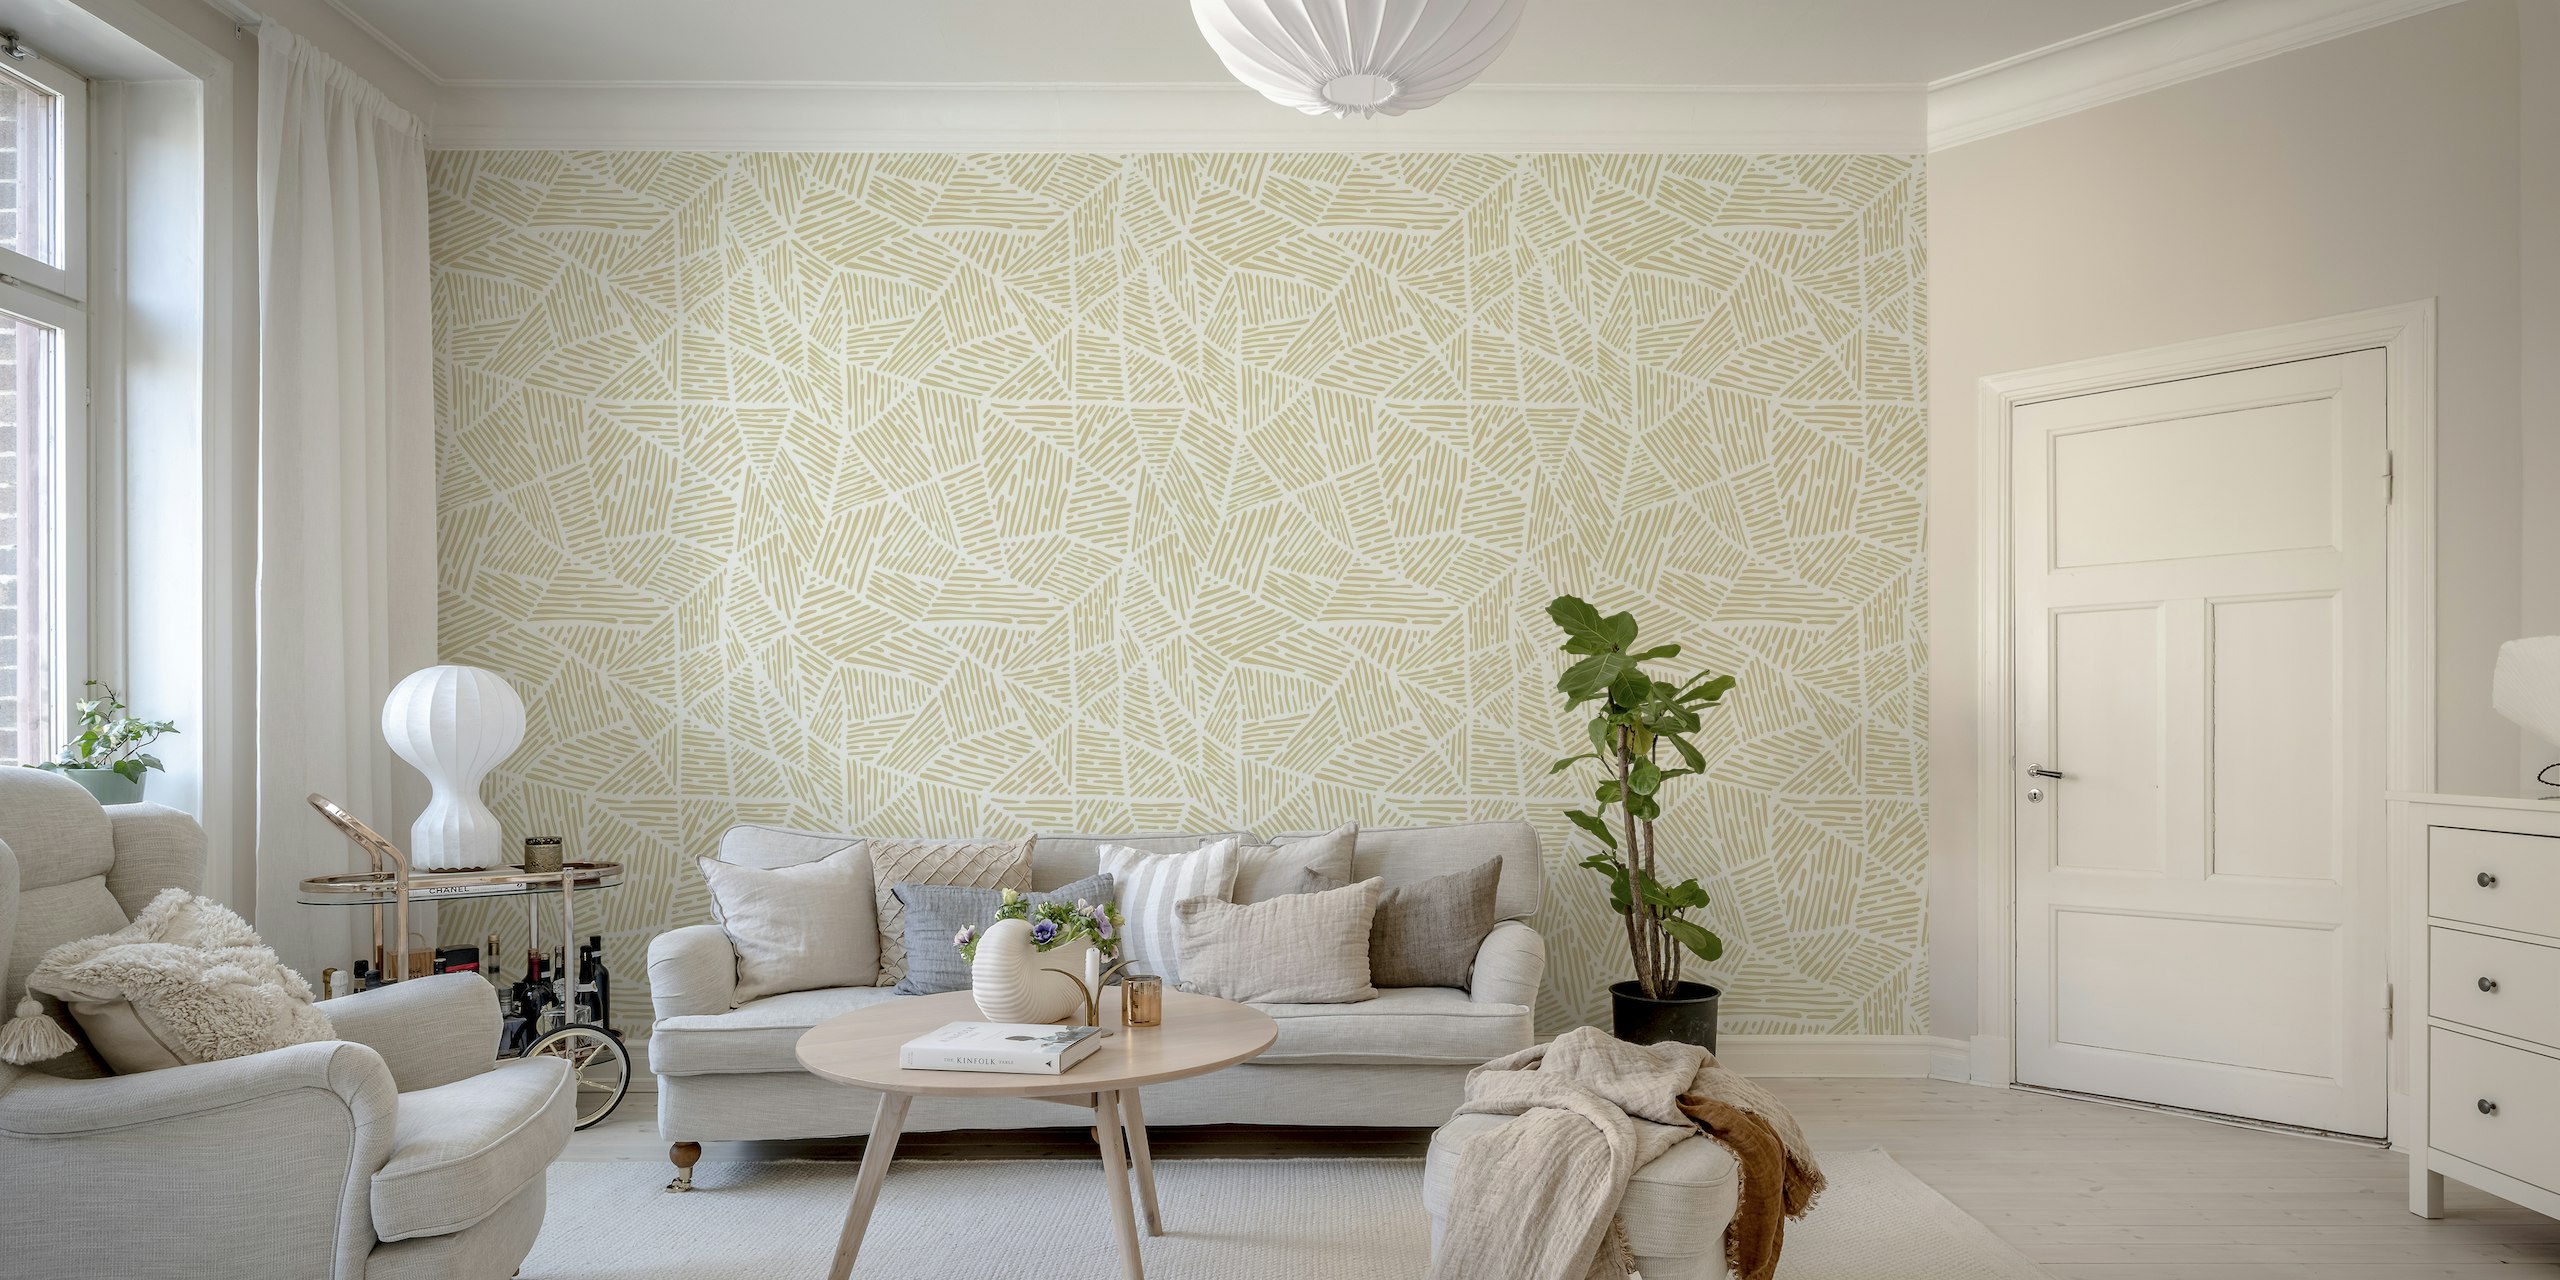 Striped boho mosaic in beige offwhite wallpaper